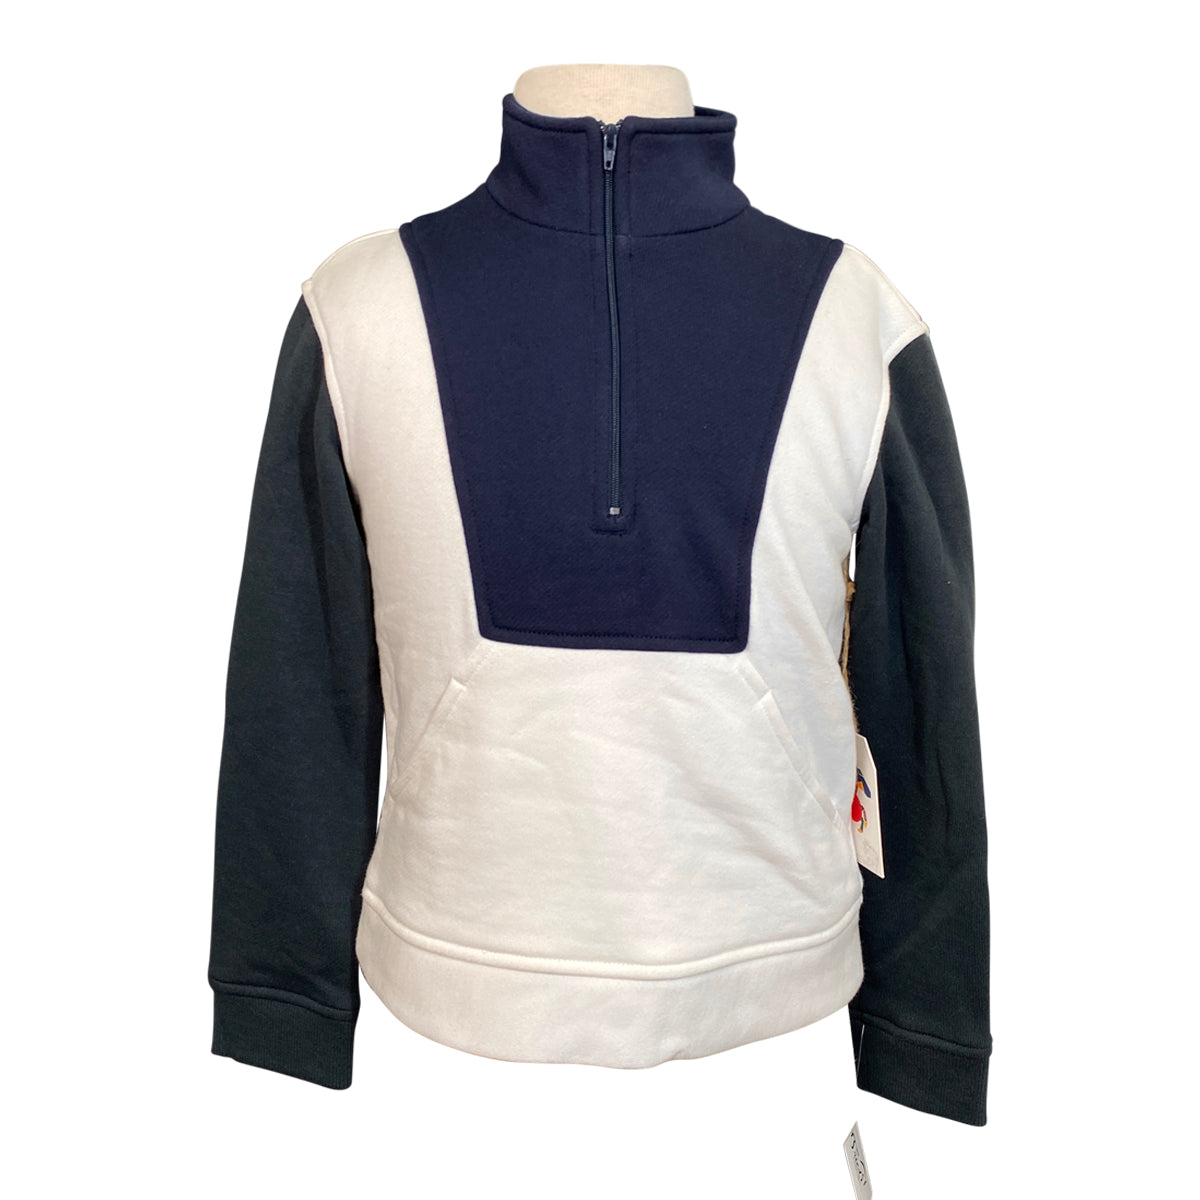 Hippique Kids 1/2 Zip Pullover Sweatshirt in Navy/White/Green